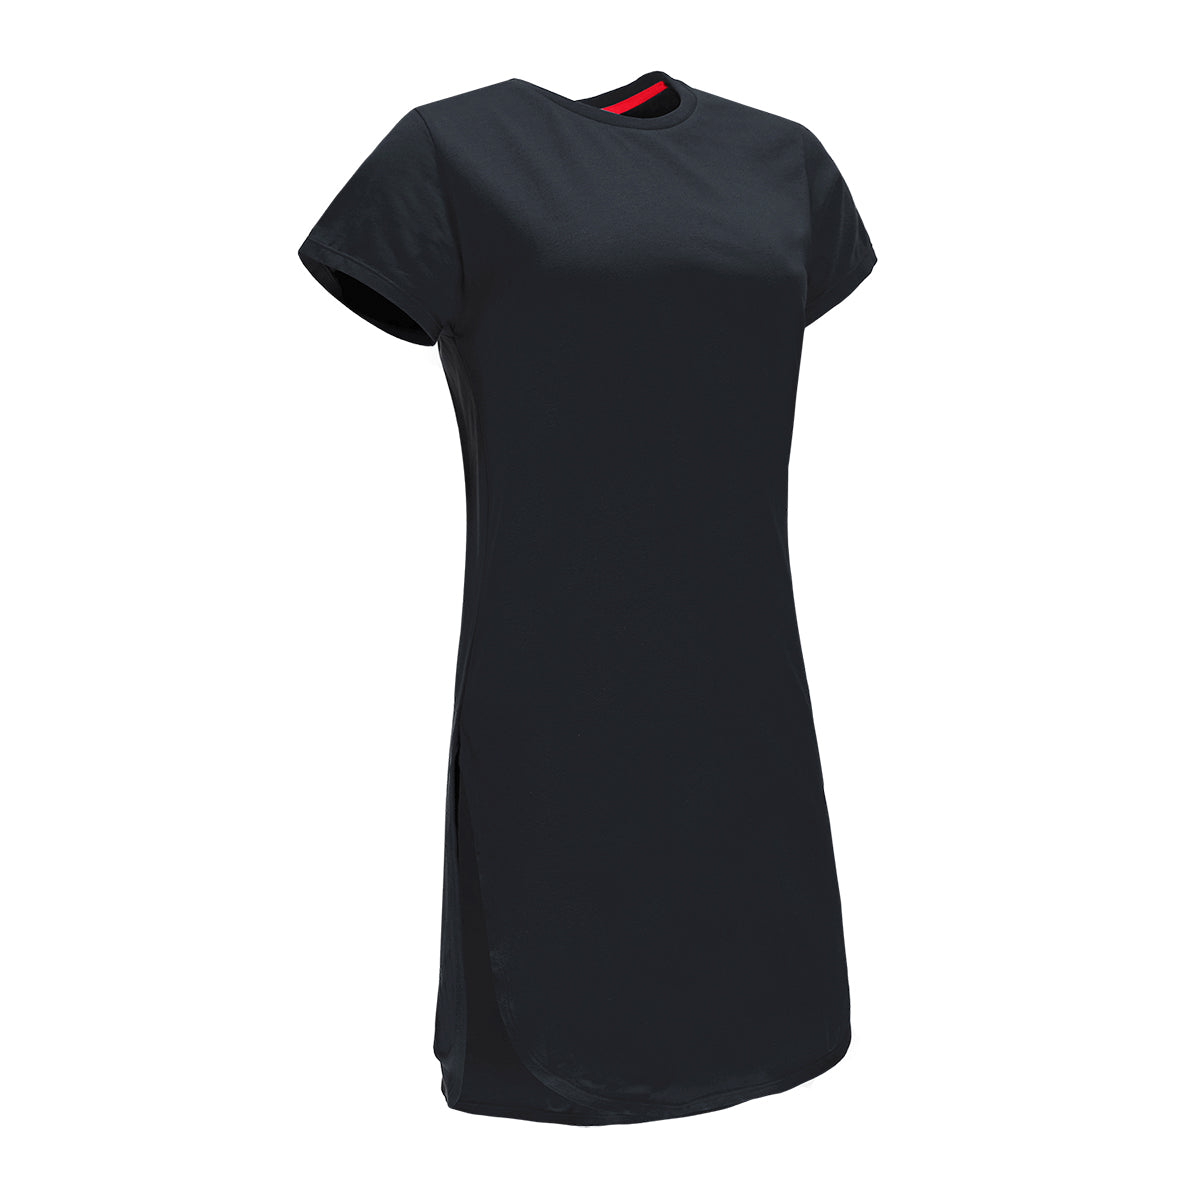 Re-Born Sports Dames lang t-shirt korte mouw zwart zijkant O-1812-3